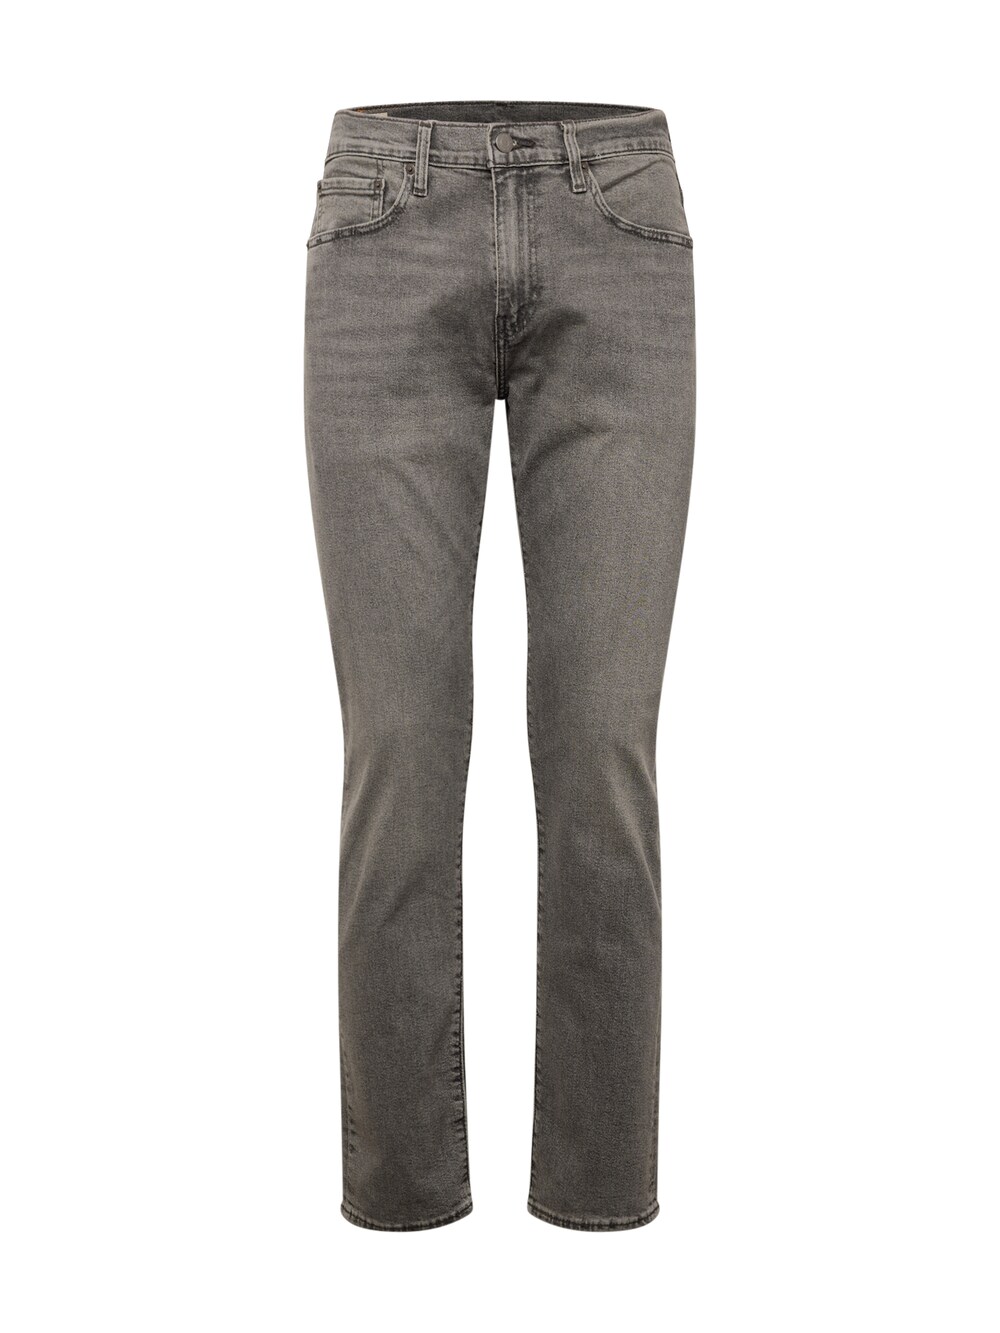 Зауженные джинсы LEVIS 502, серый